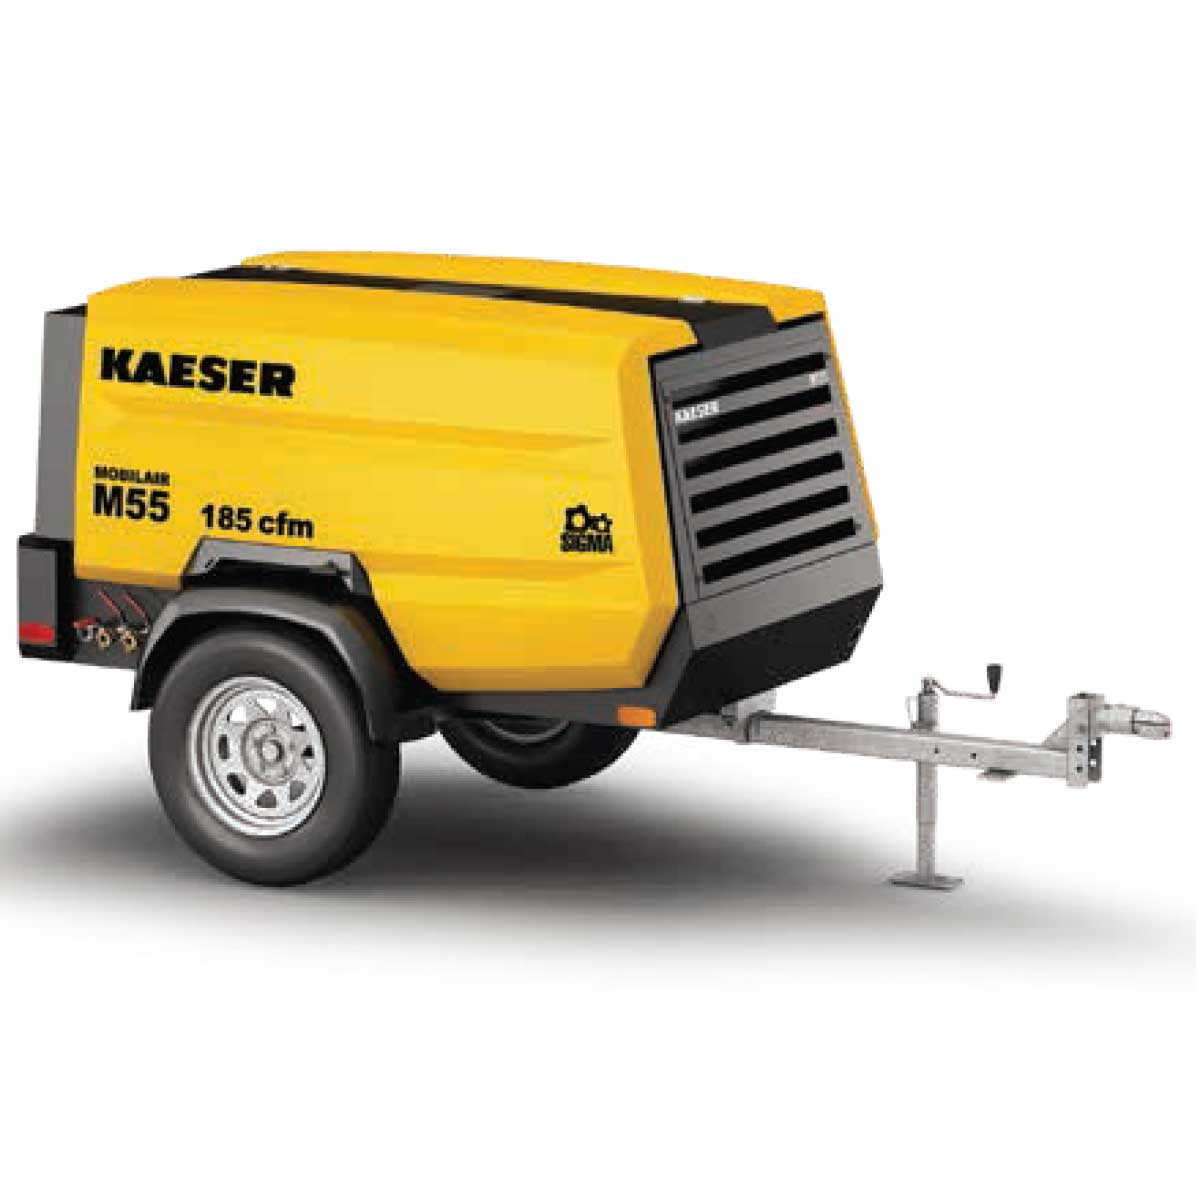 Kaeser Mobilair Portable Rotary Screw Air Compressor Model M55PE